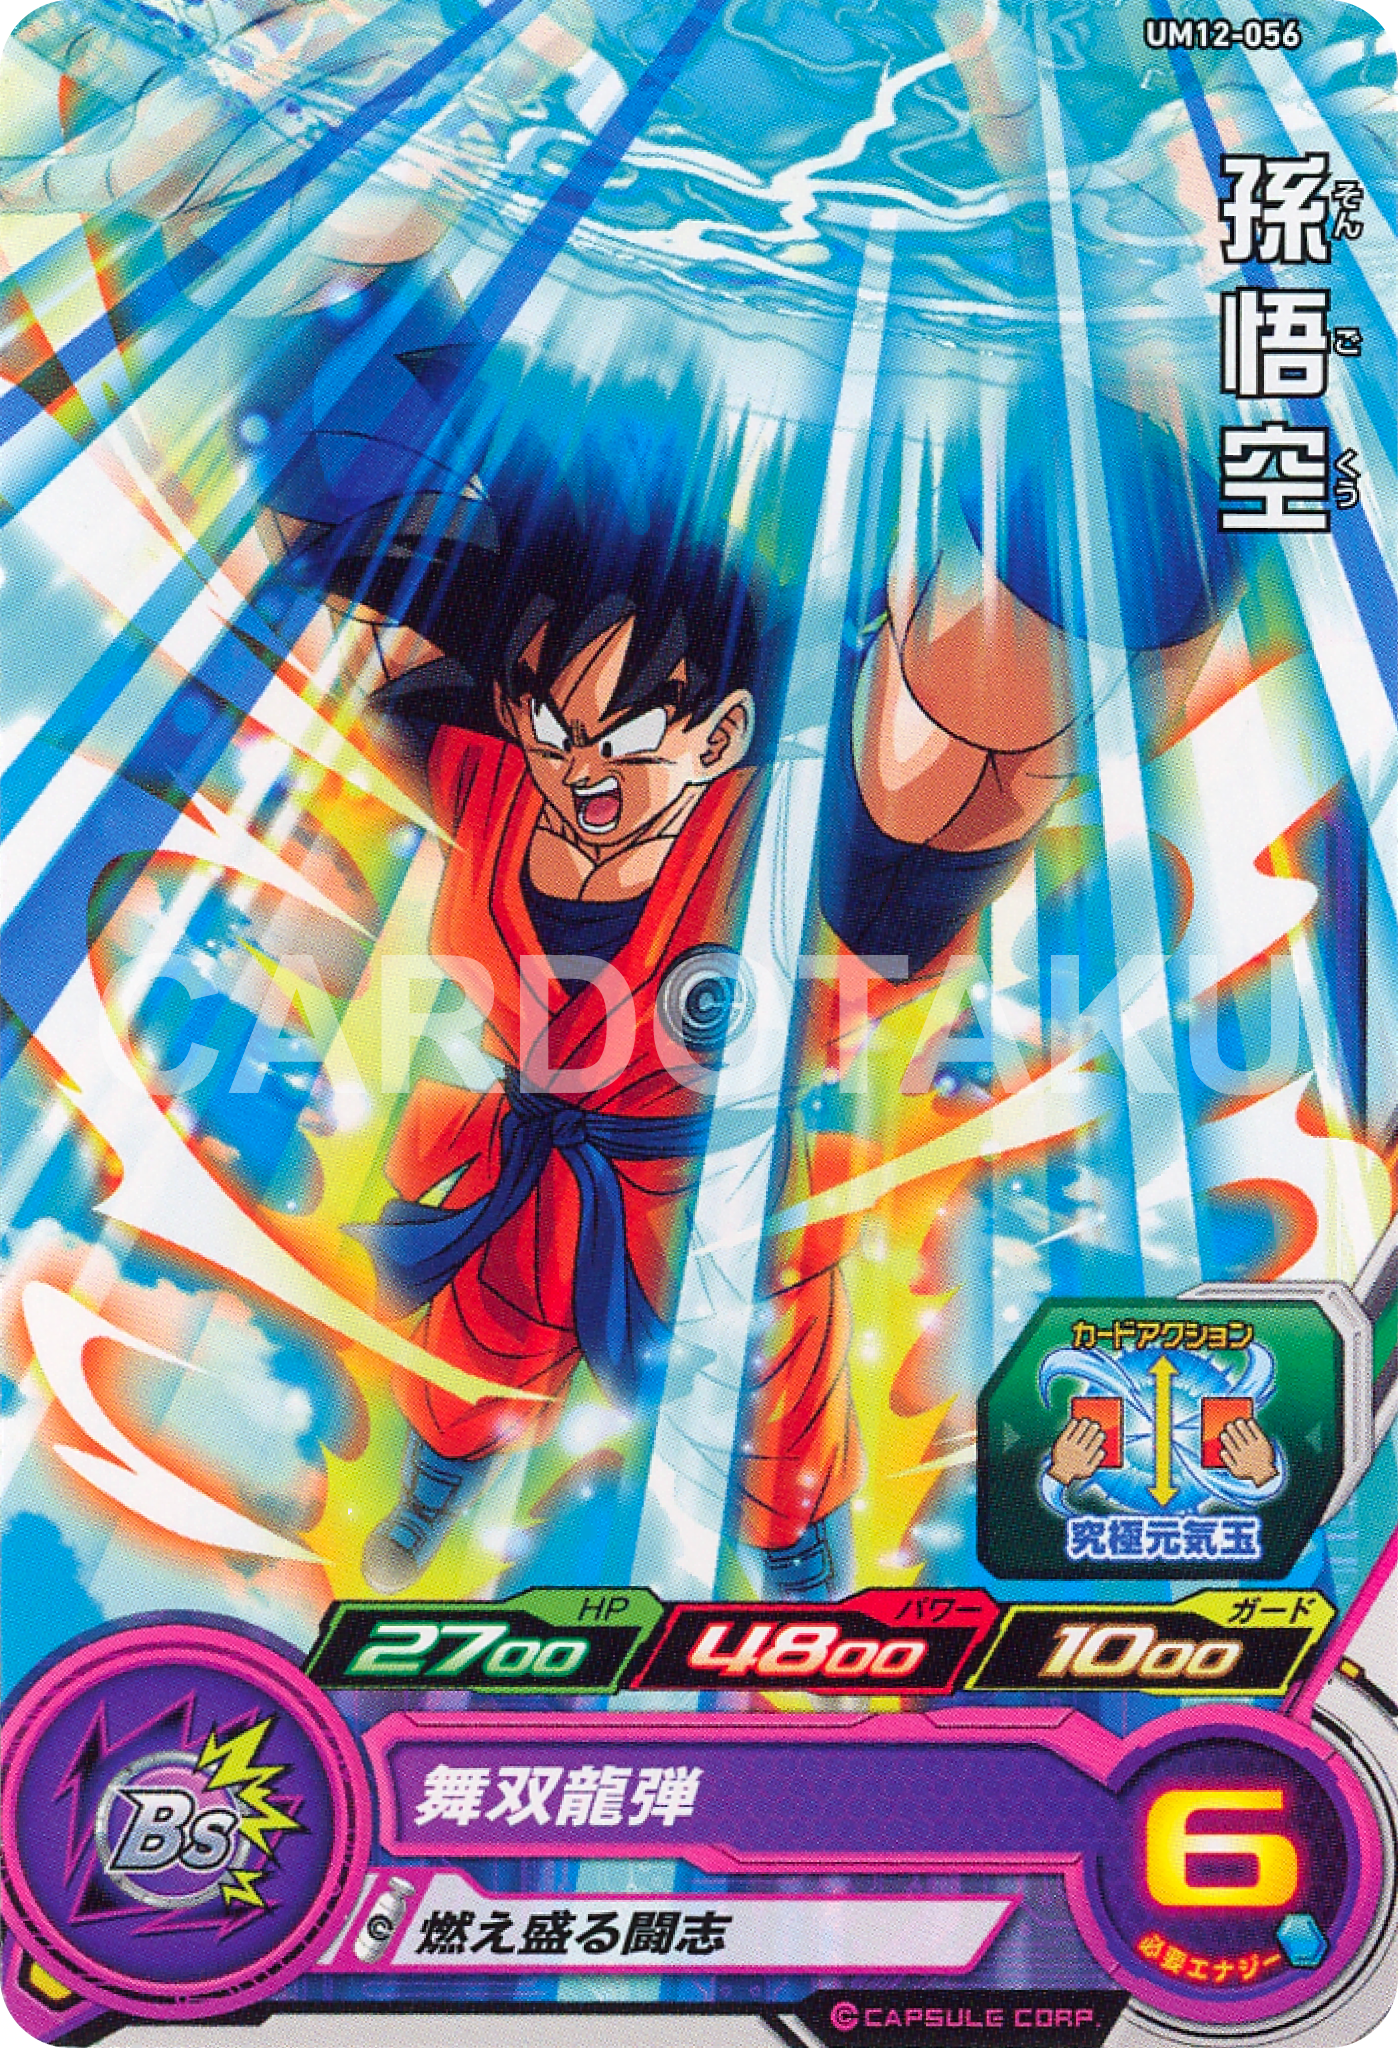 SUPER DRAGON BALL HEROES UM12-056 Common card Son Goku